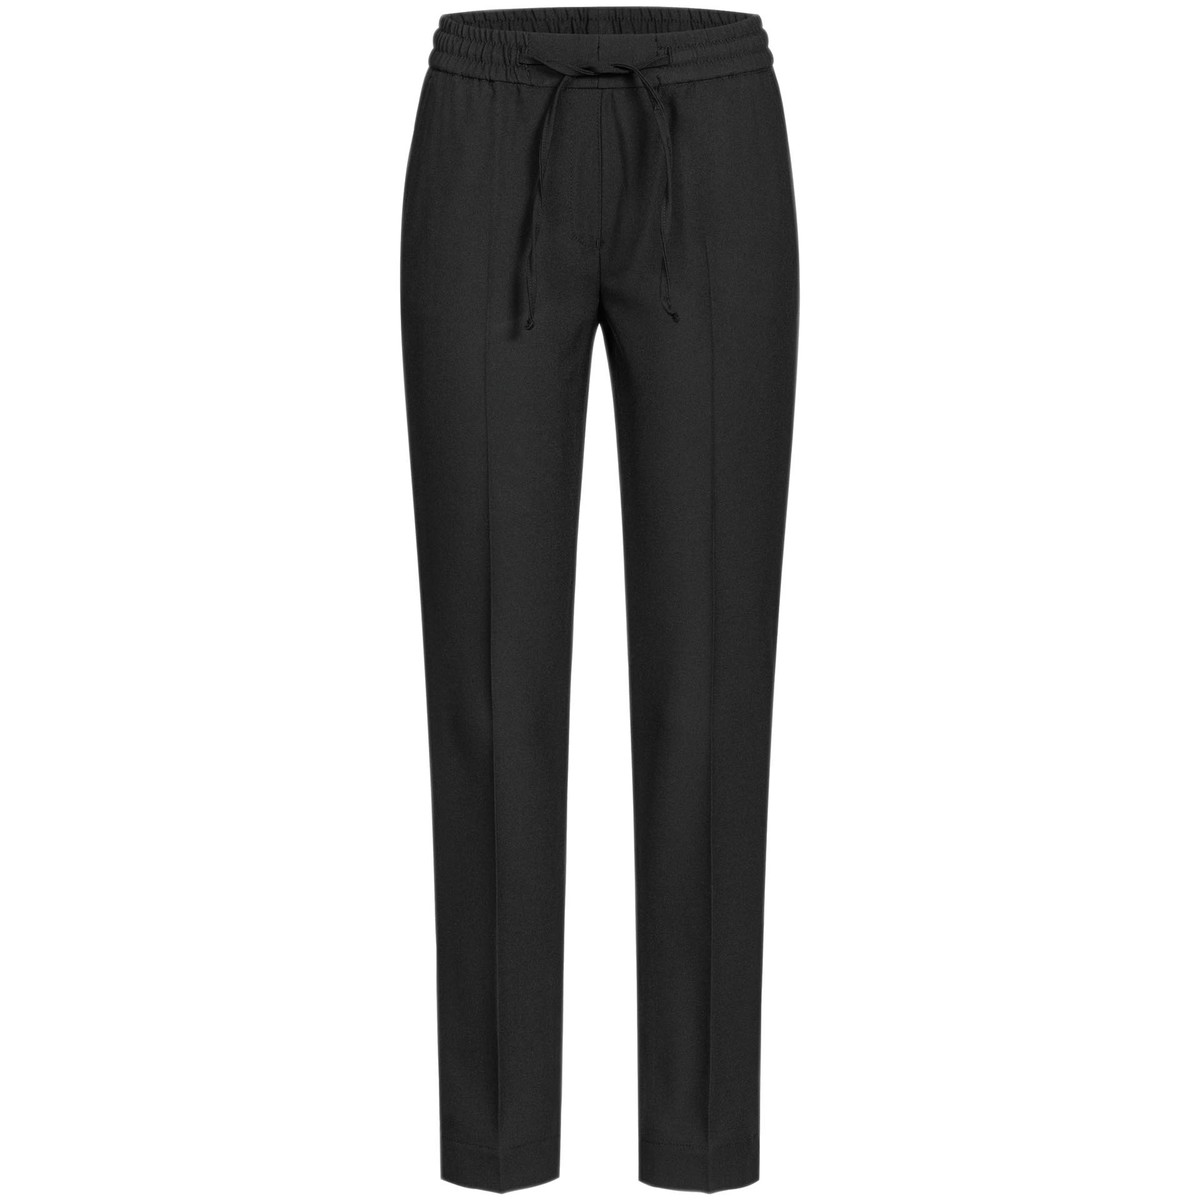 Damen-Hose "Joggpants" schwarz Größe 36